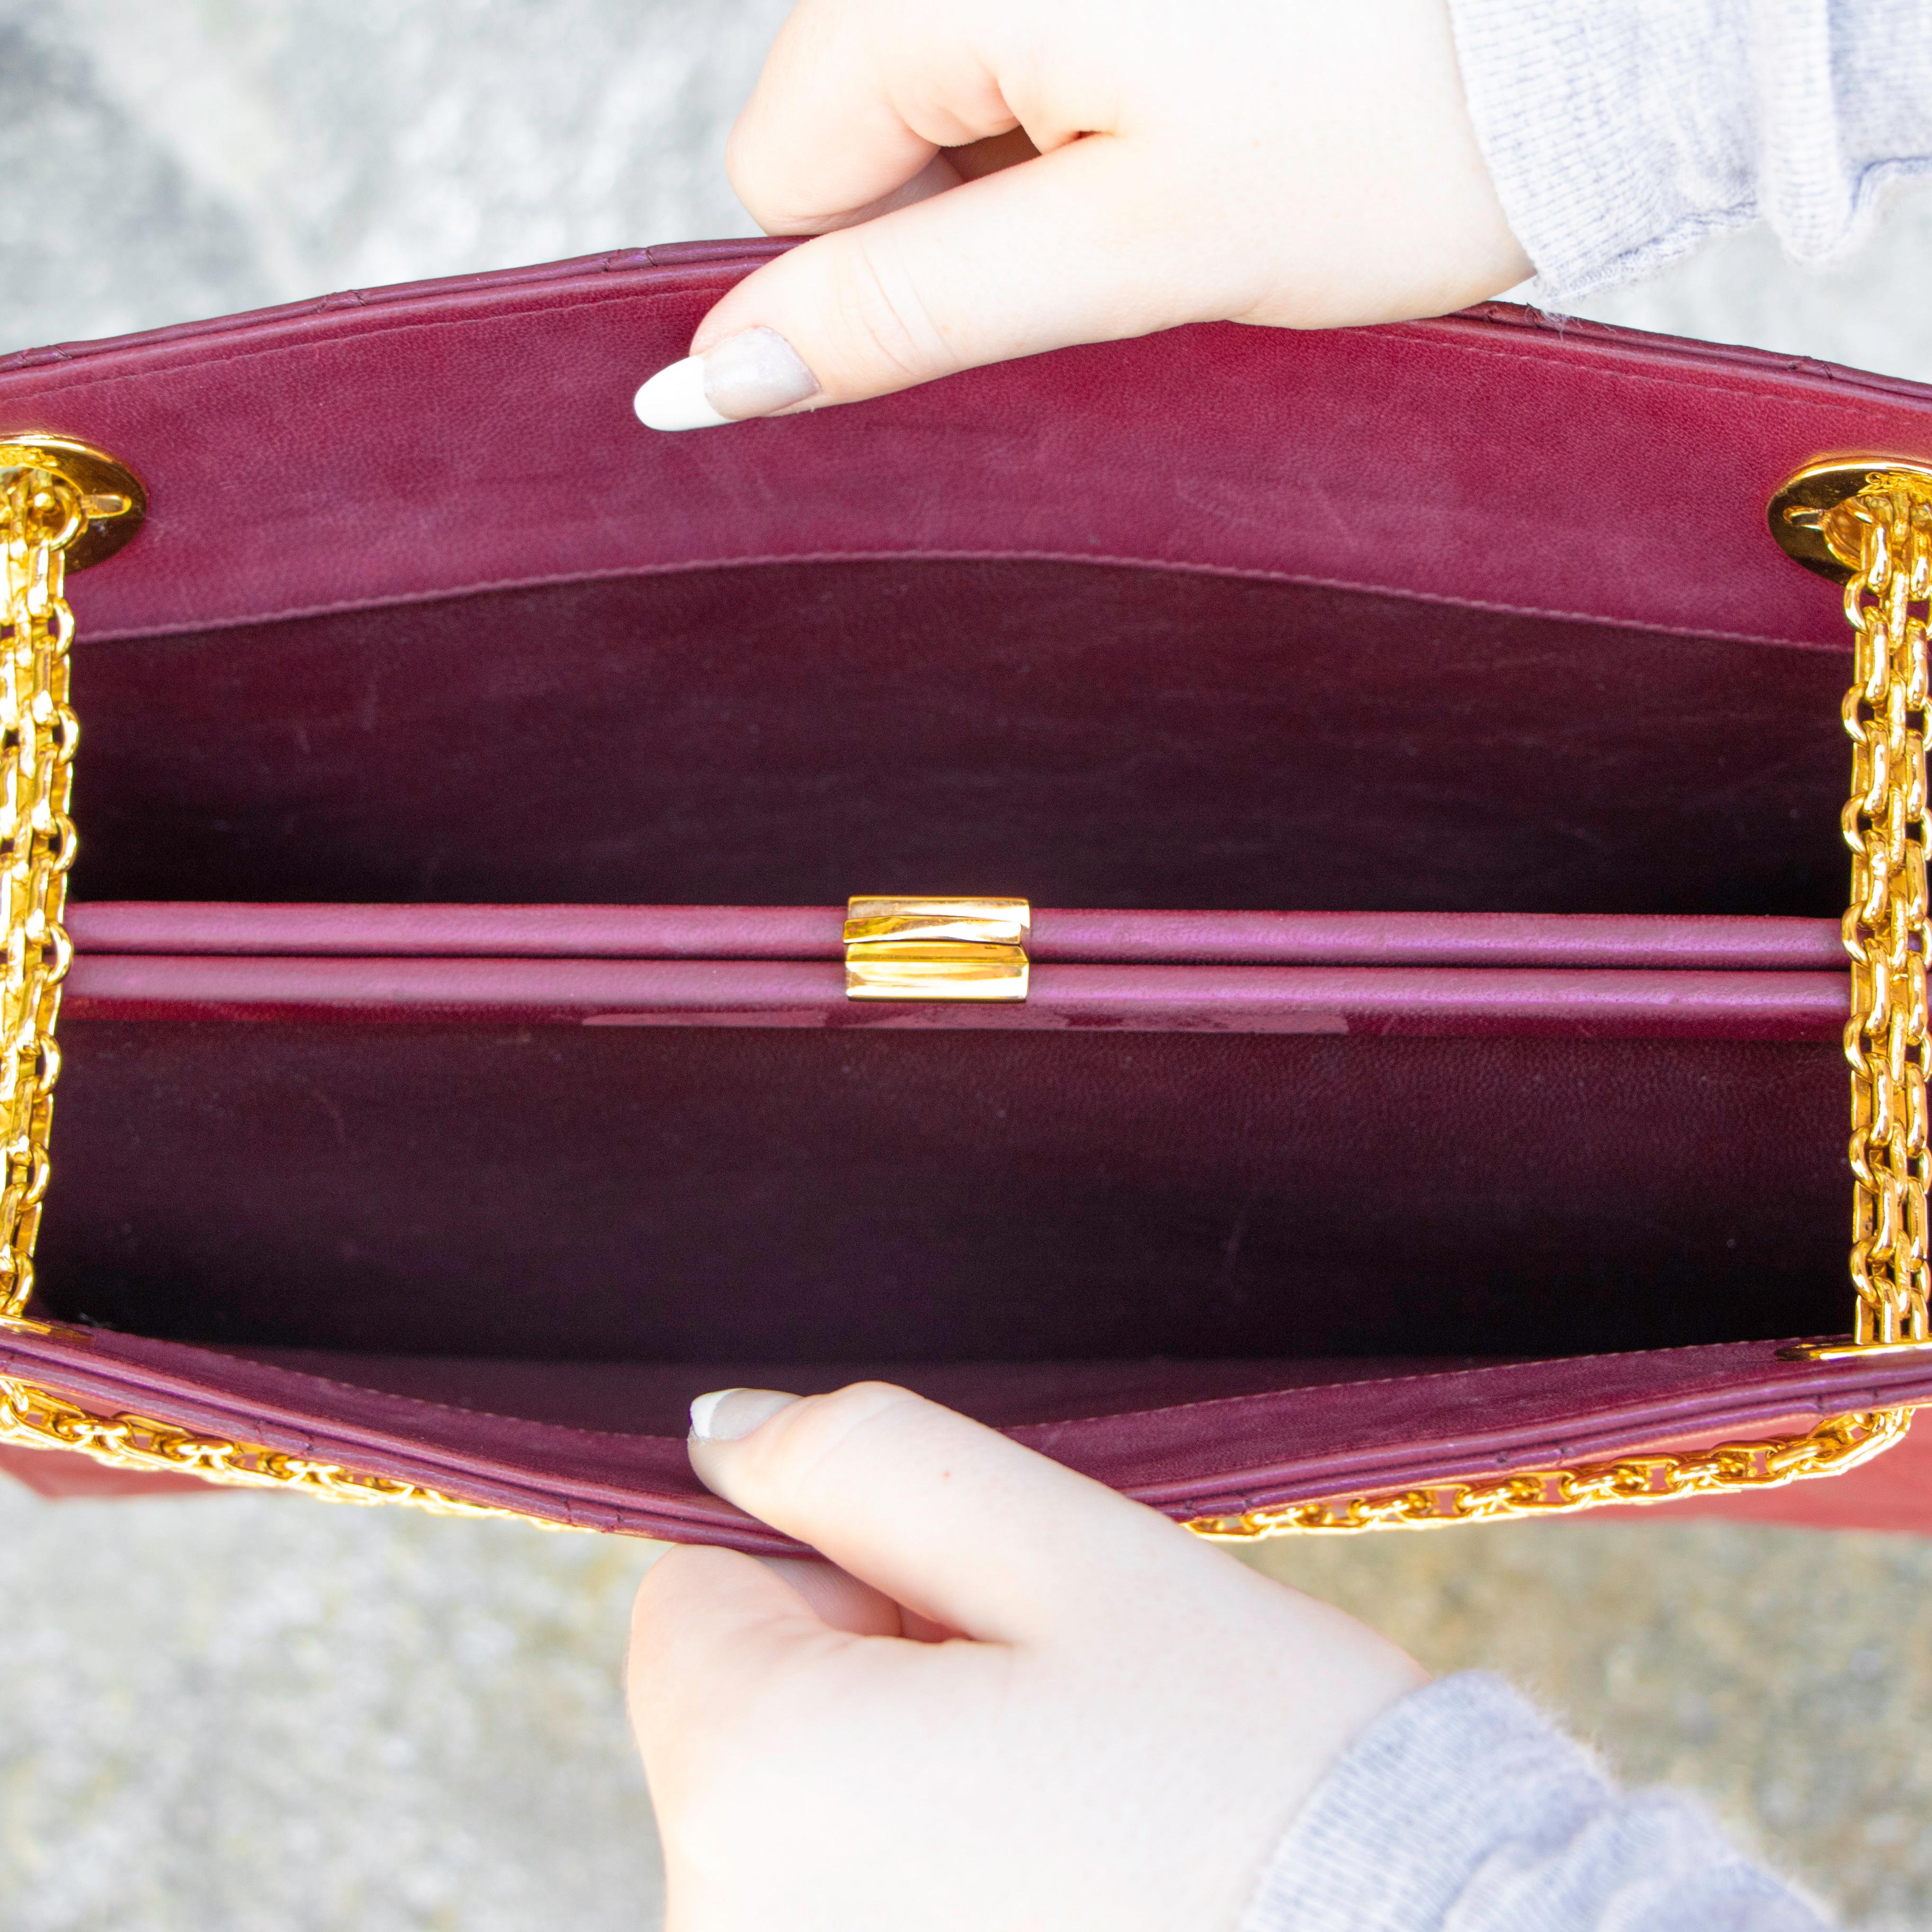 Vintage Brown Chanel Handbag with Gold-Colored Strap 3